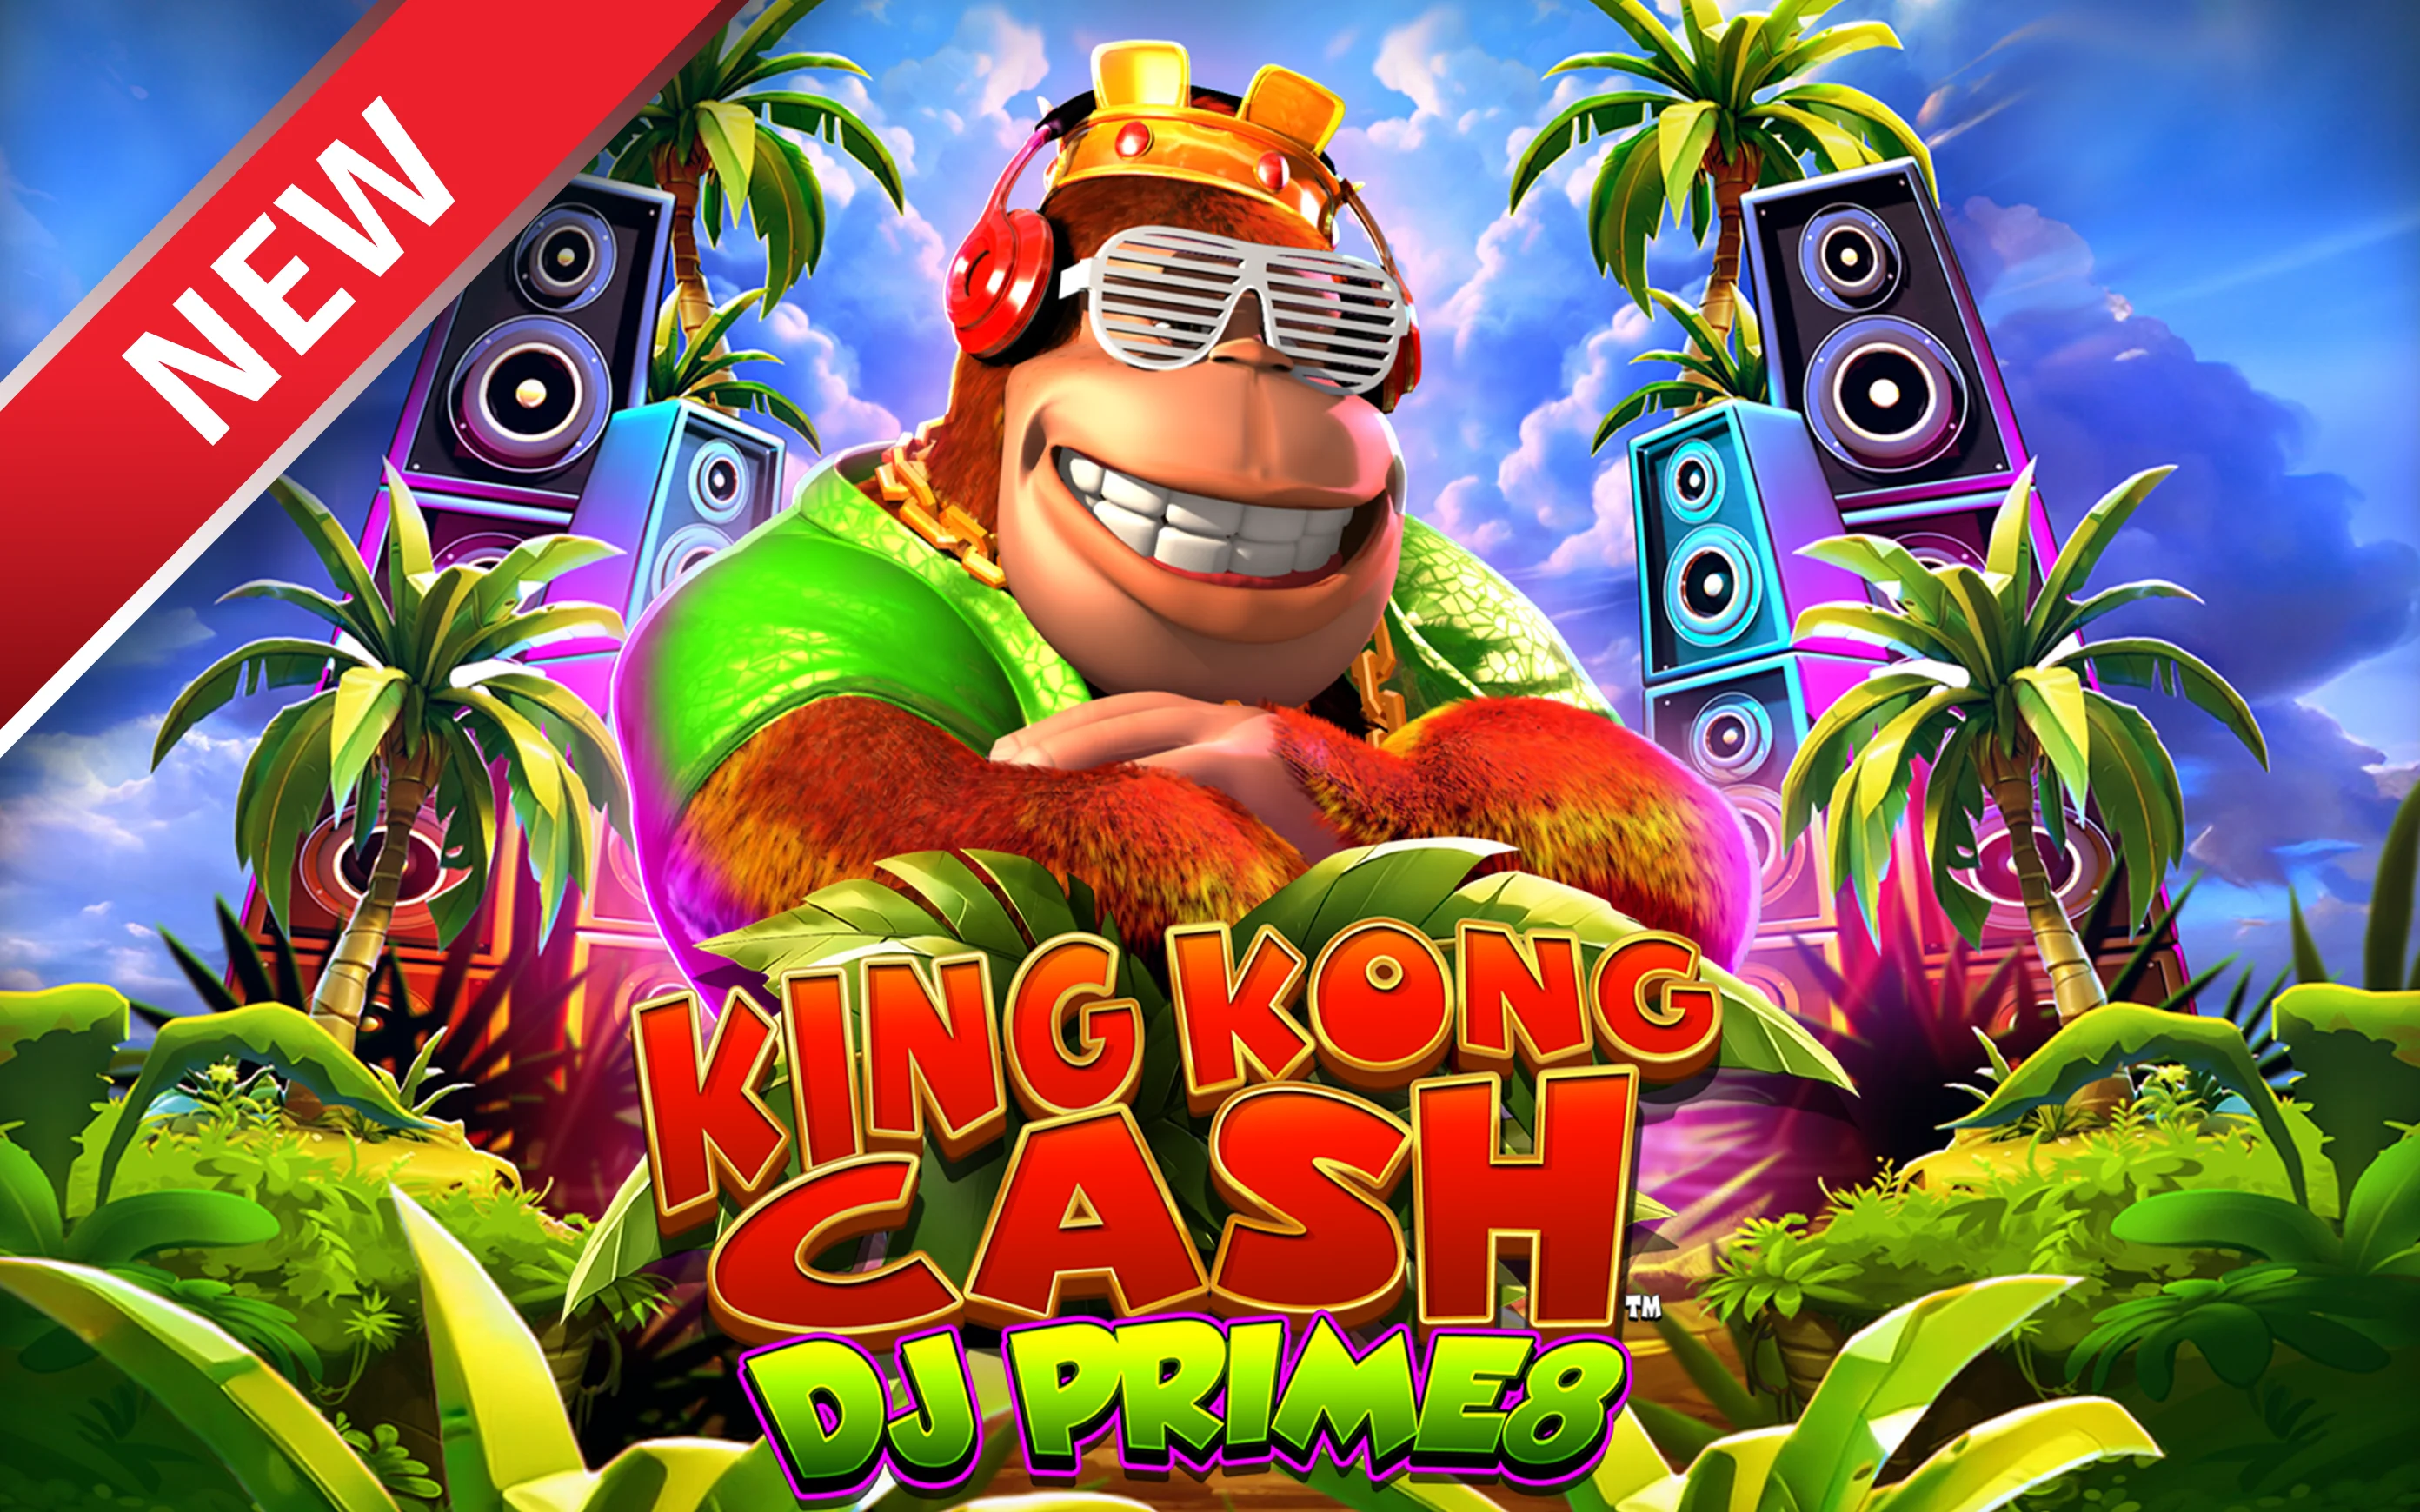 Играйте King Kong Cash DJ Prime8 на Starcasino.be онлайн казино